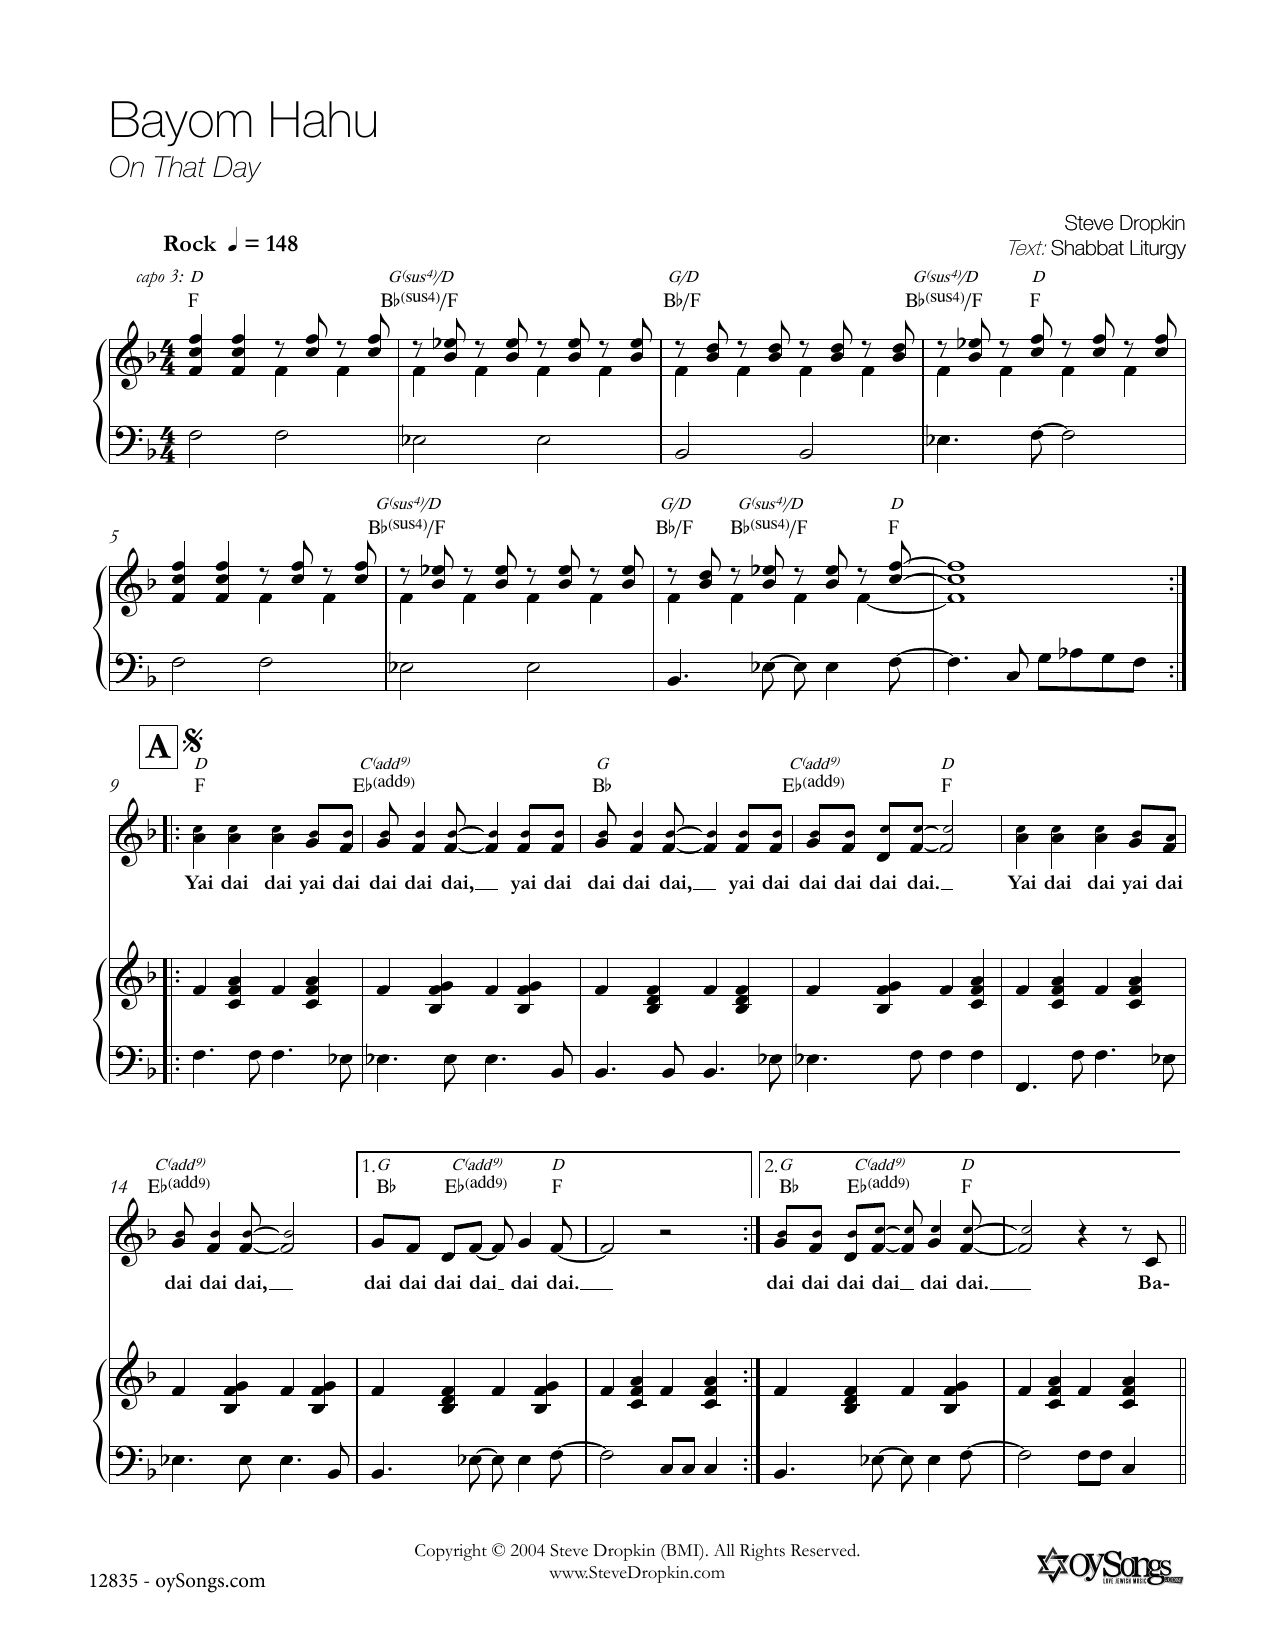 Steve Dropkin Bayom Hahu Sheet Music Notes & Chords for Melody Line, Lyrics & Chords - Download or Print PDF